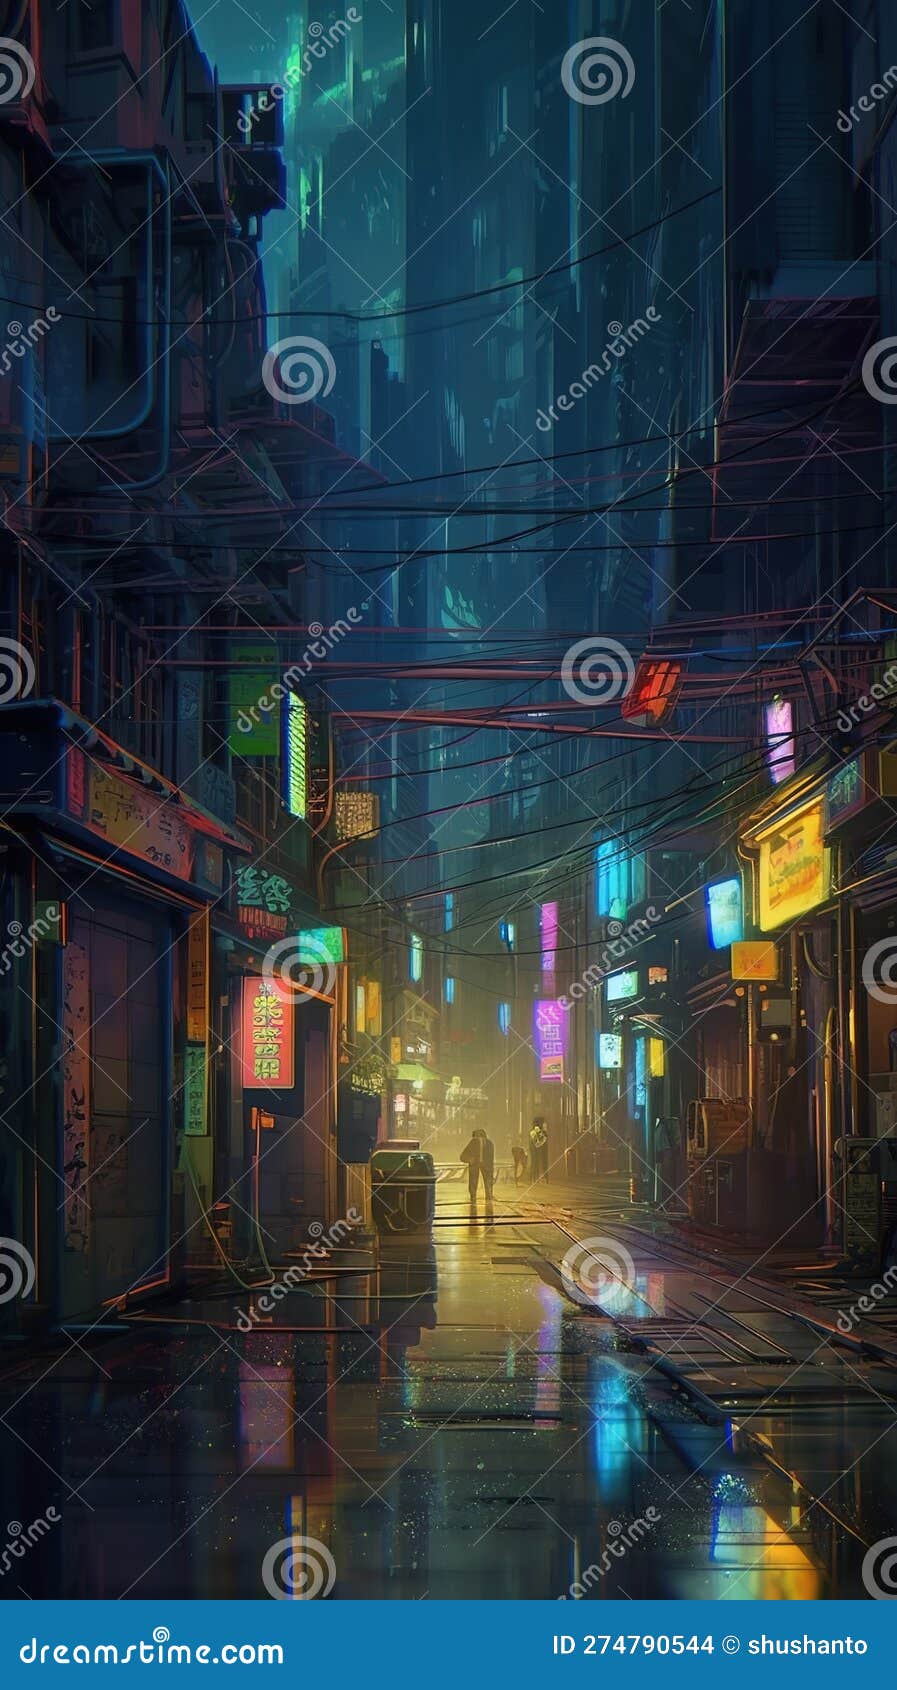 anime inspired neon dystopia glitchpunk aesthetic